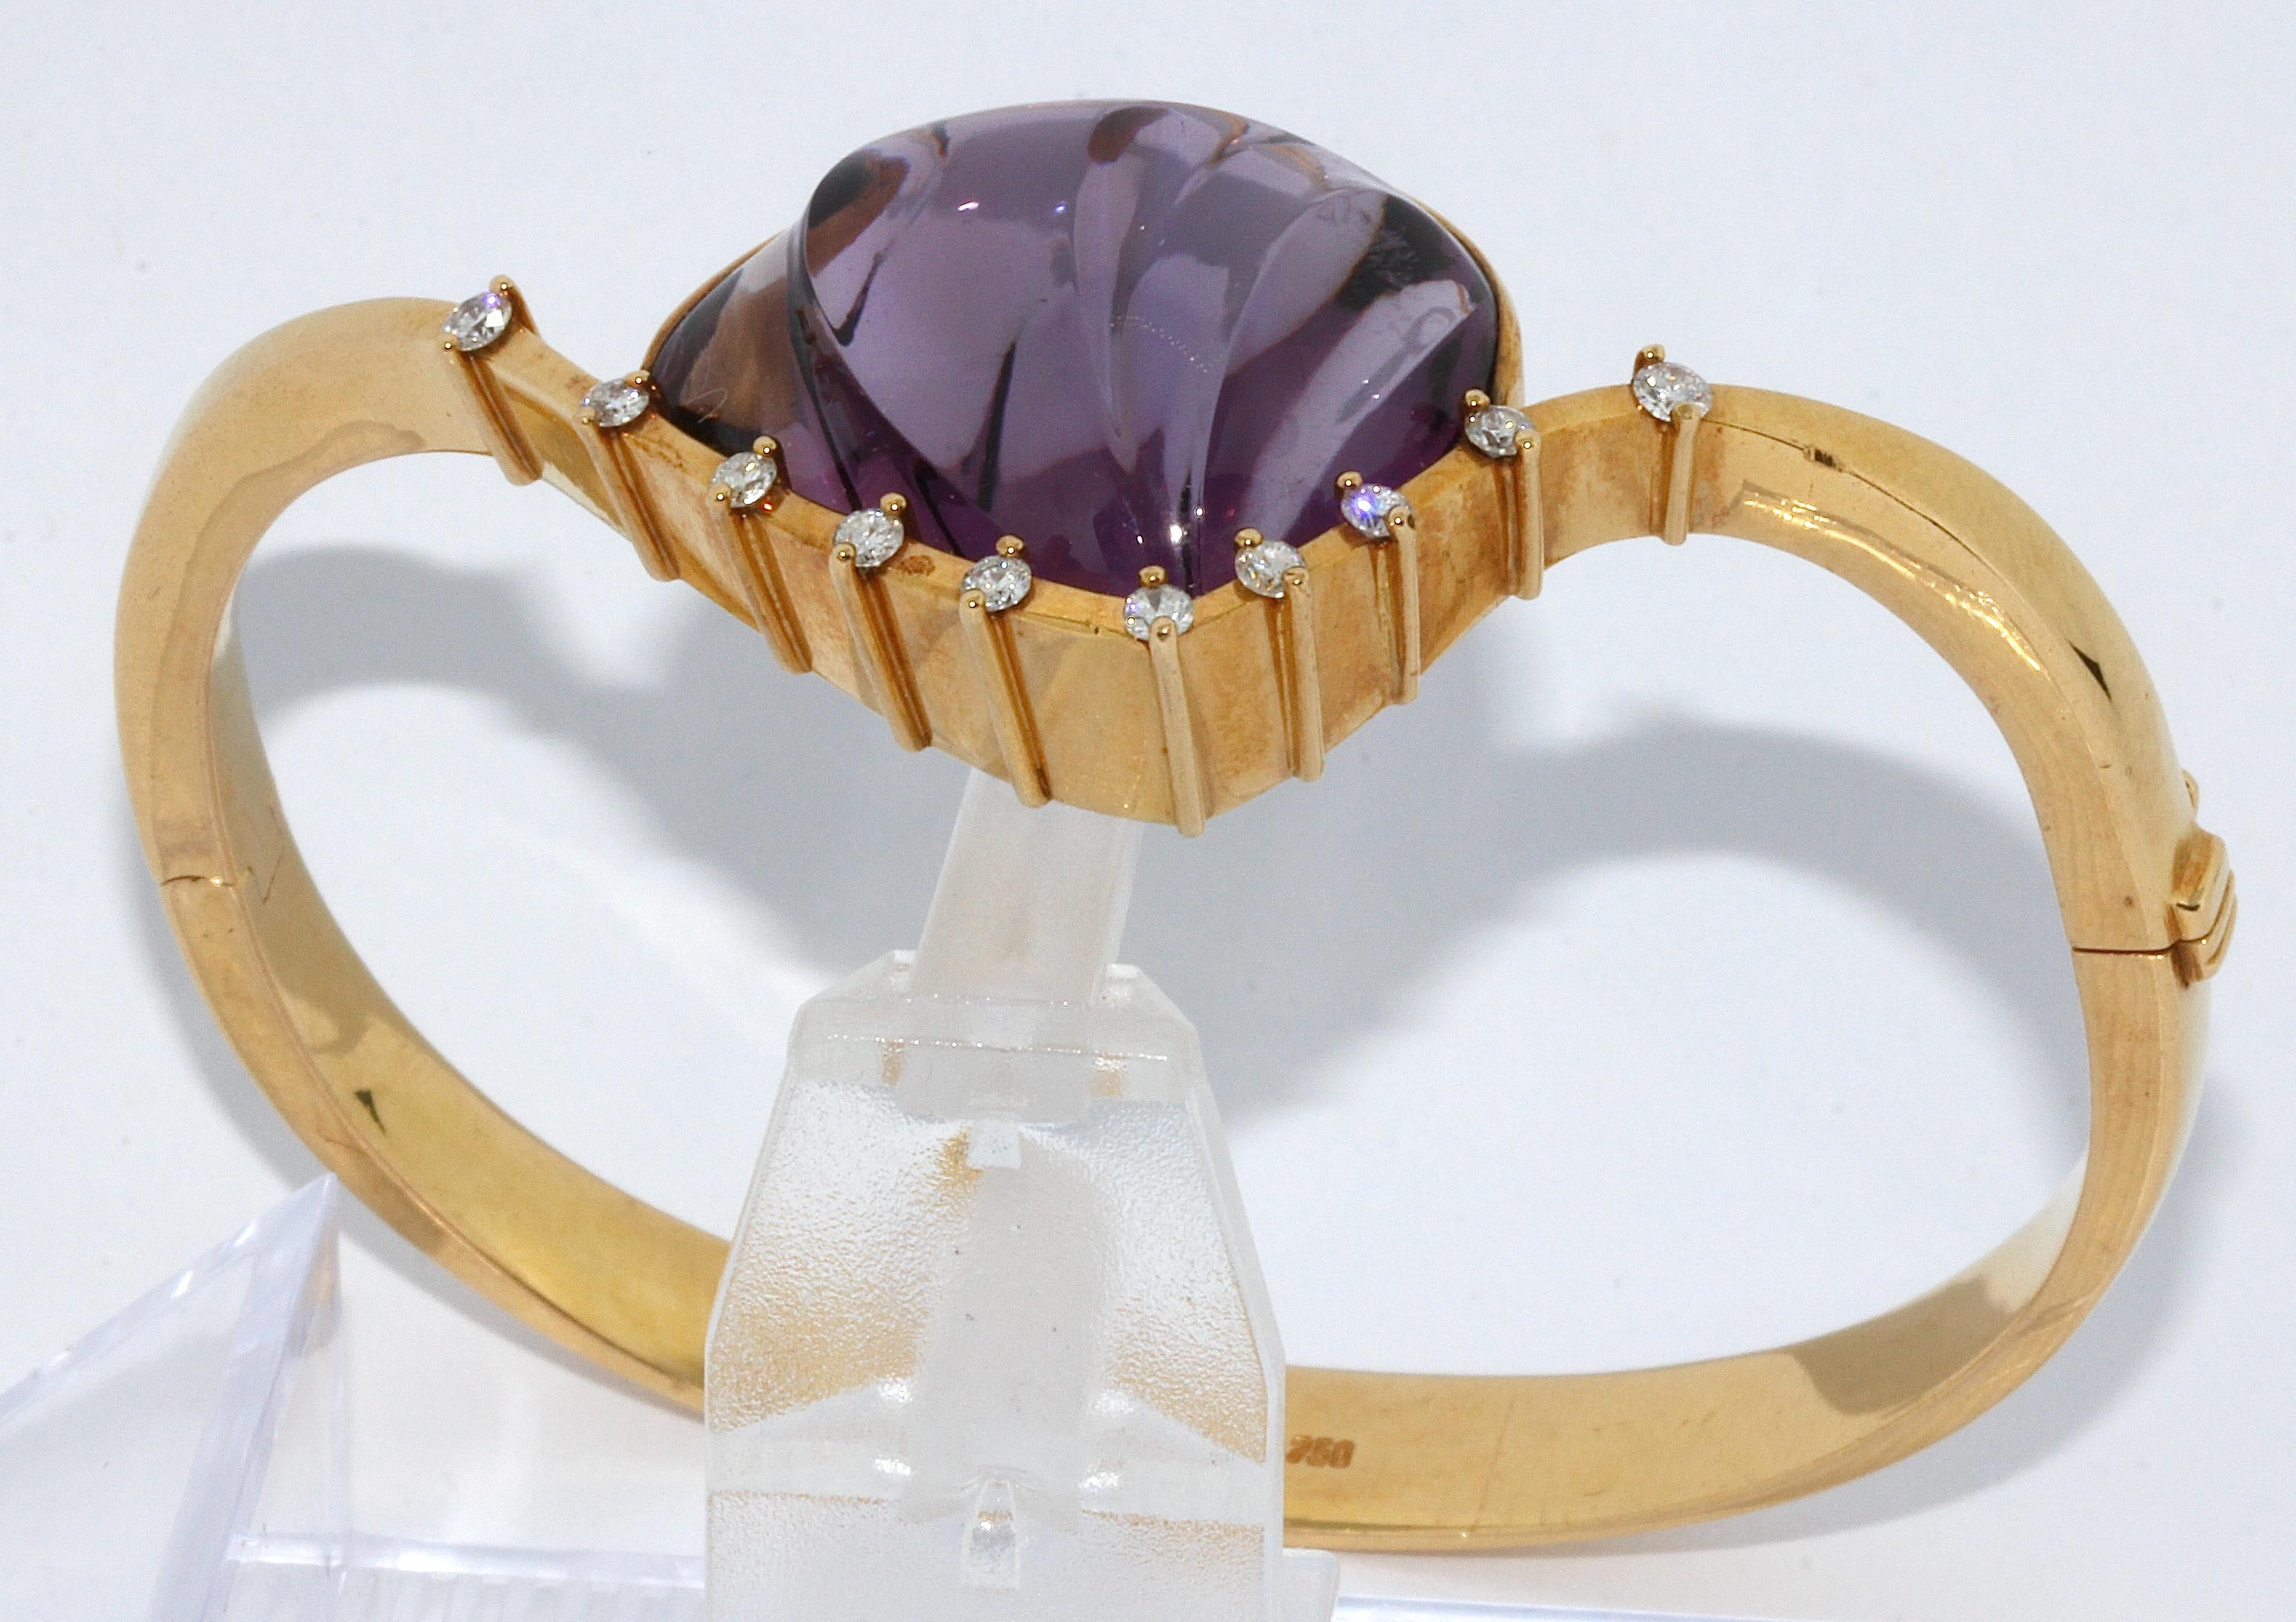 18 Karat Gold Bangle, Bracelet, Set with Large Amethyst and Diamonds. Cadeaux. For Sale 3